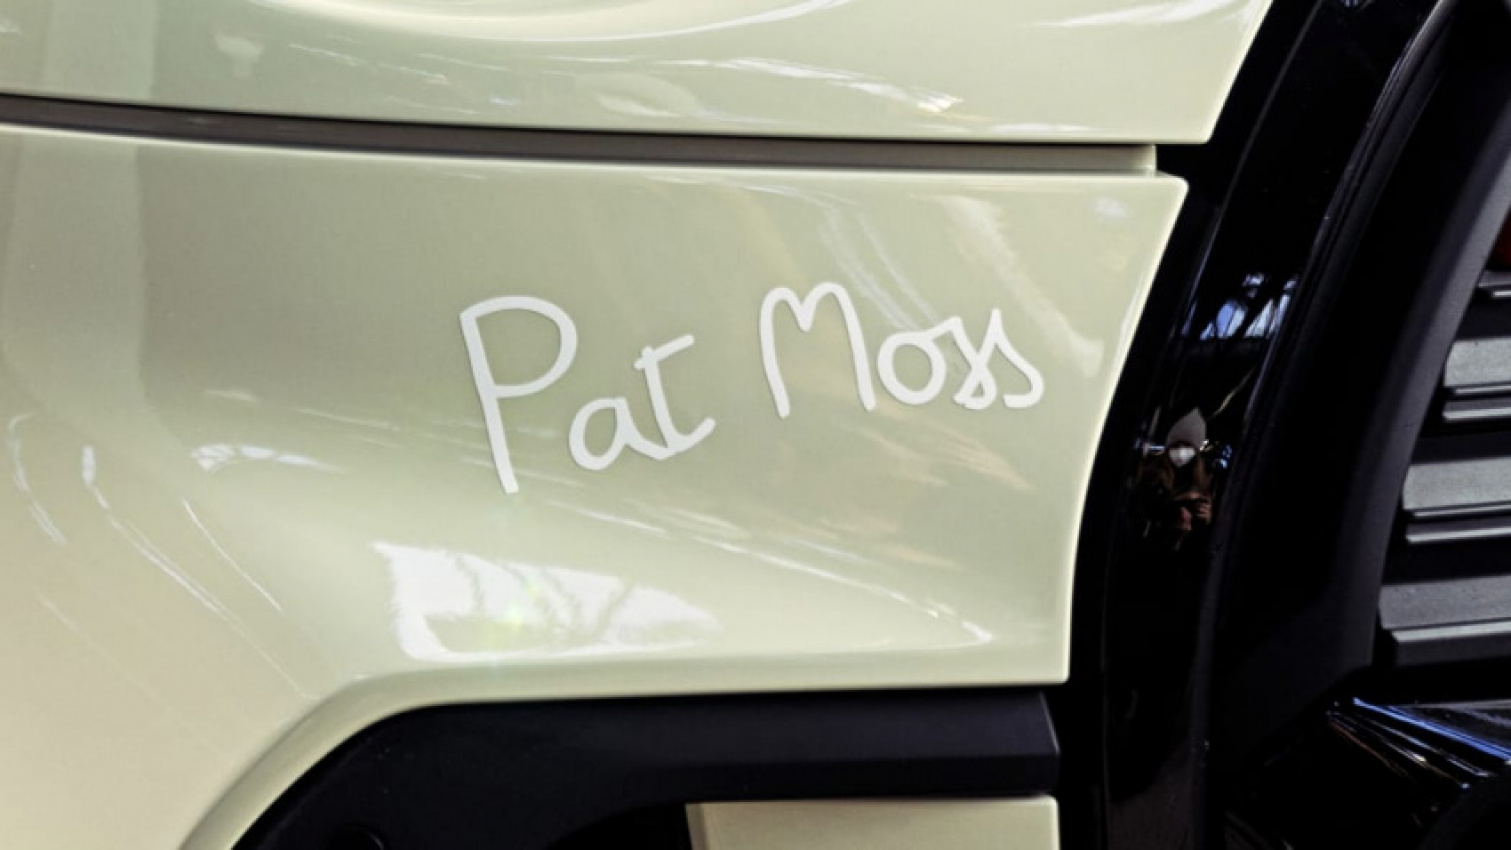 automotive history, autos, cars, mini, celebrities, hatchback, motorsports, performance, mini marks international women's day with pat moss edition